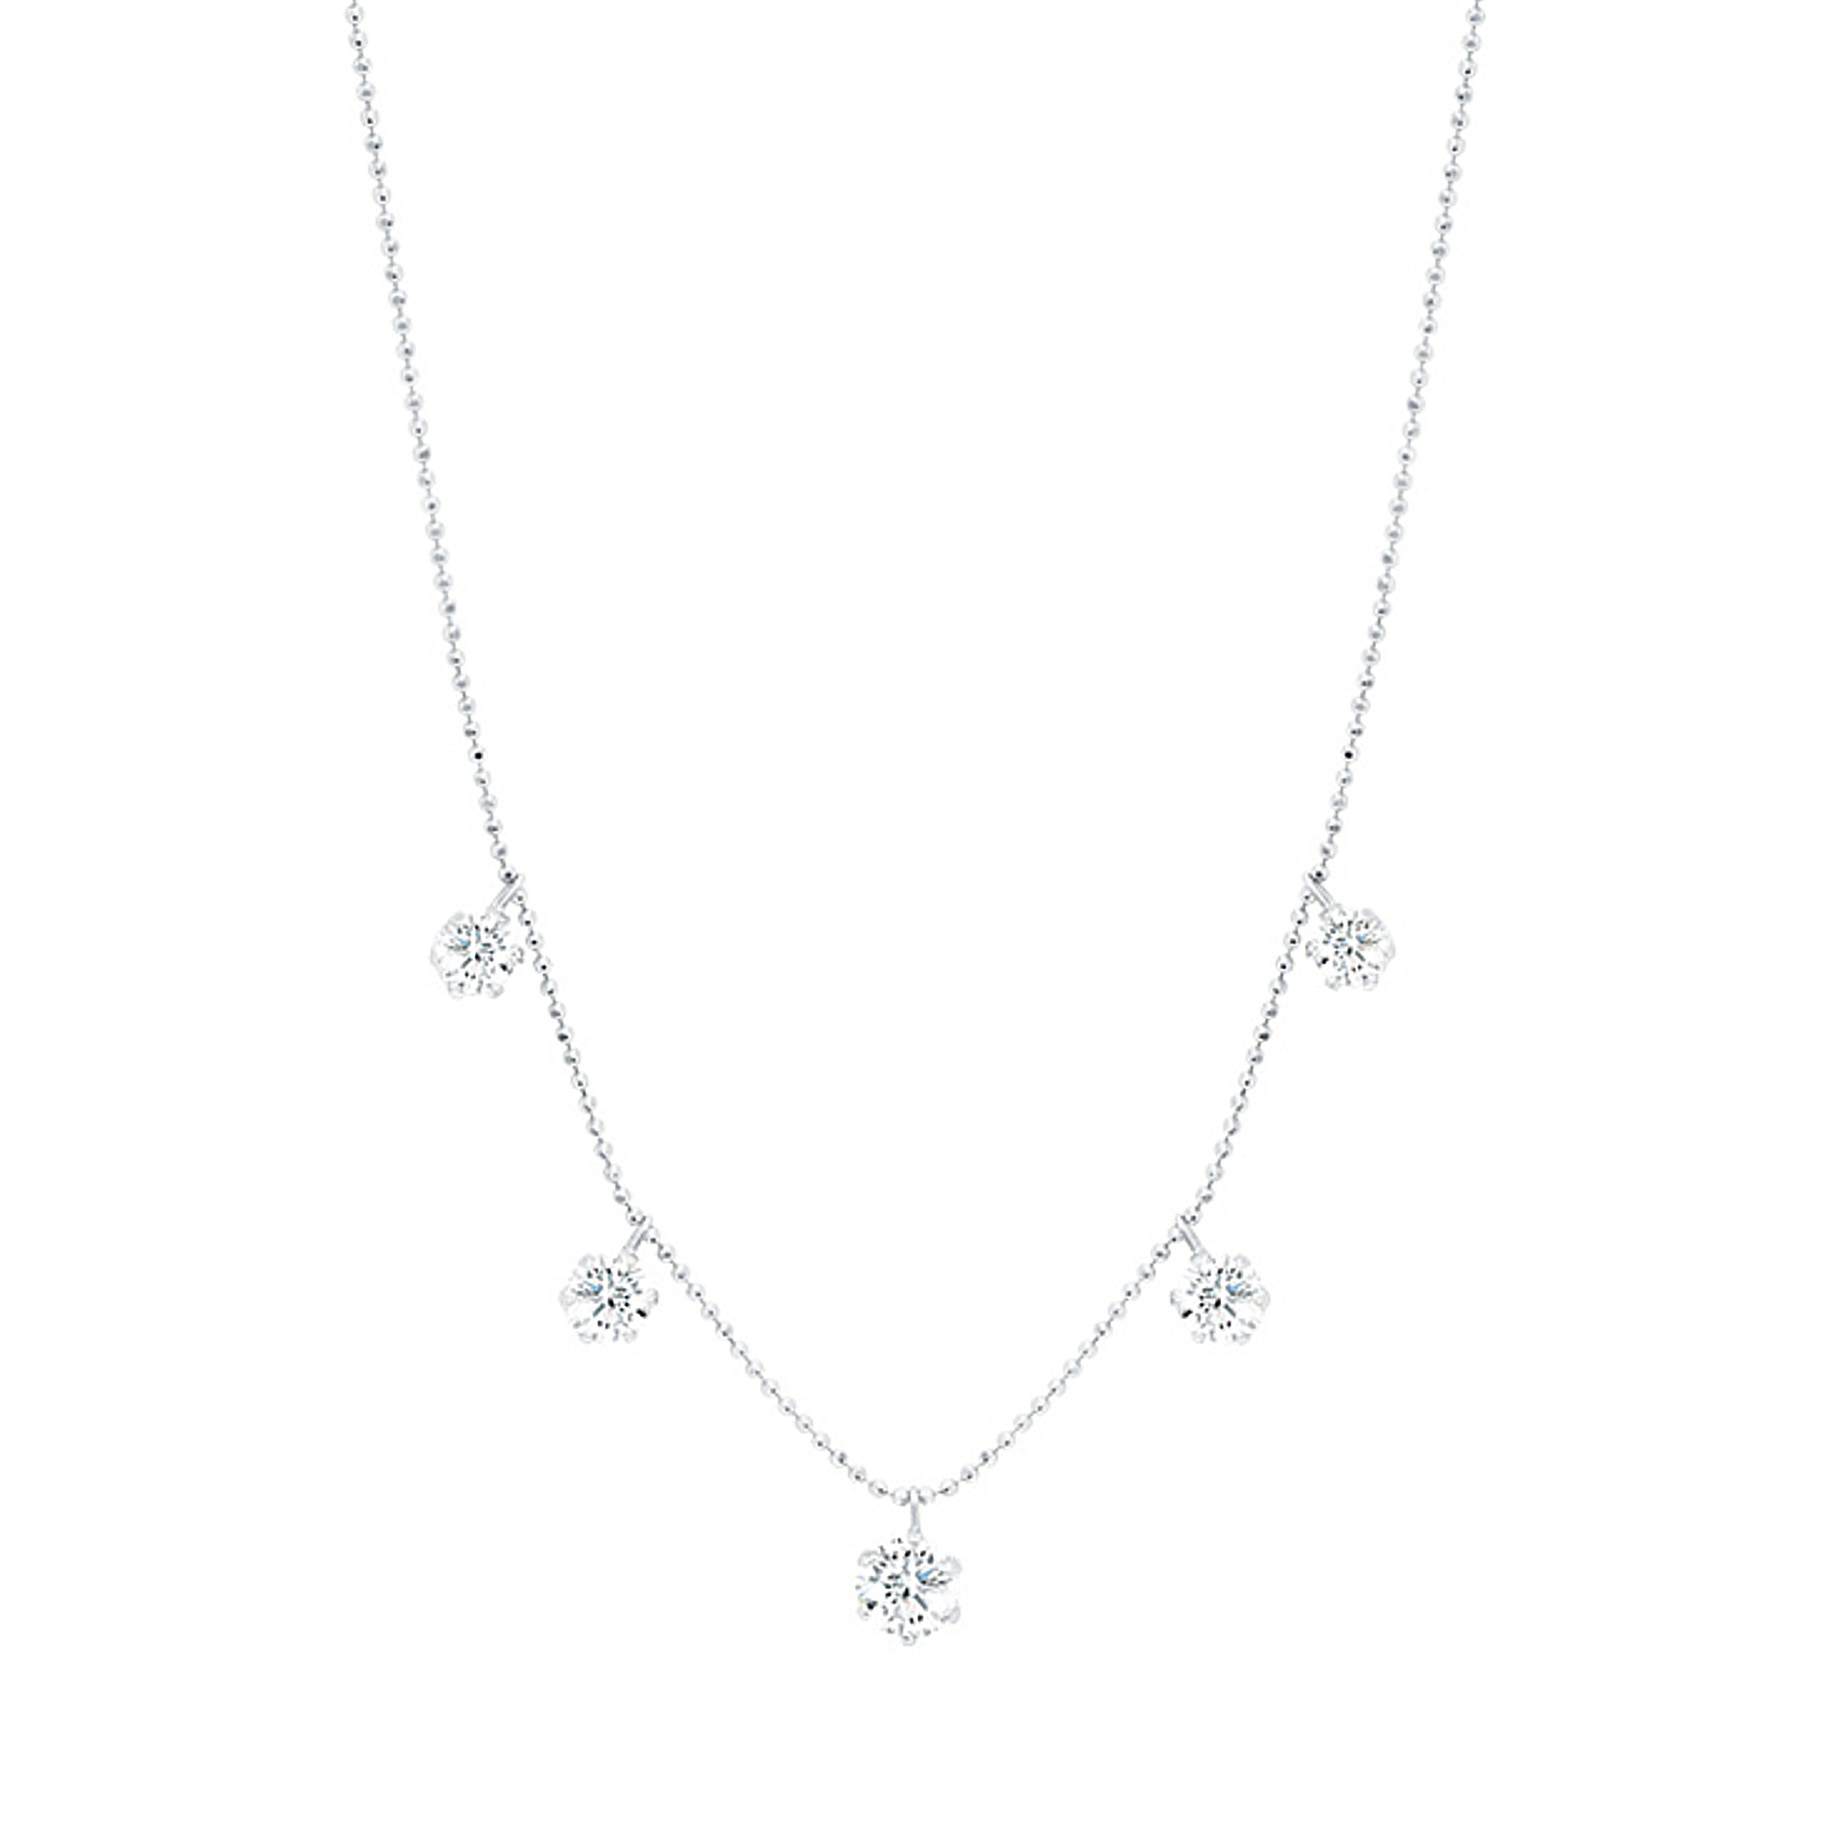 Graziela Gems - Necklace - Large Floating Diamond Necklace - White Gold